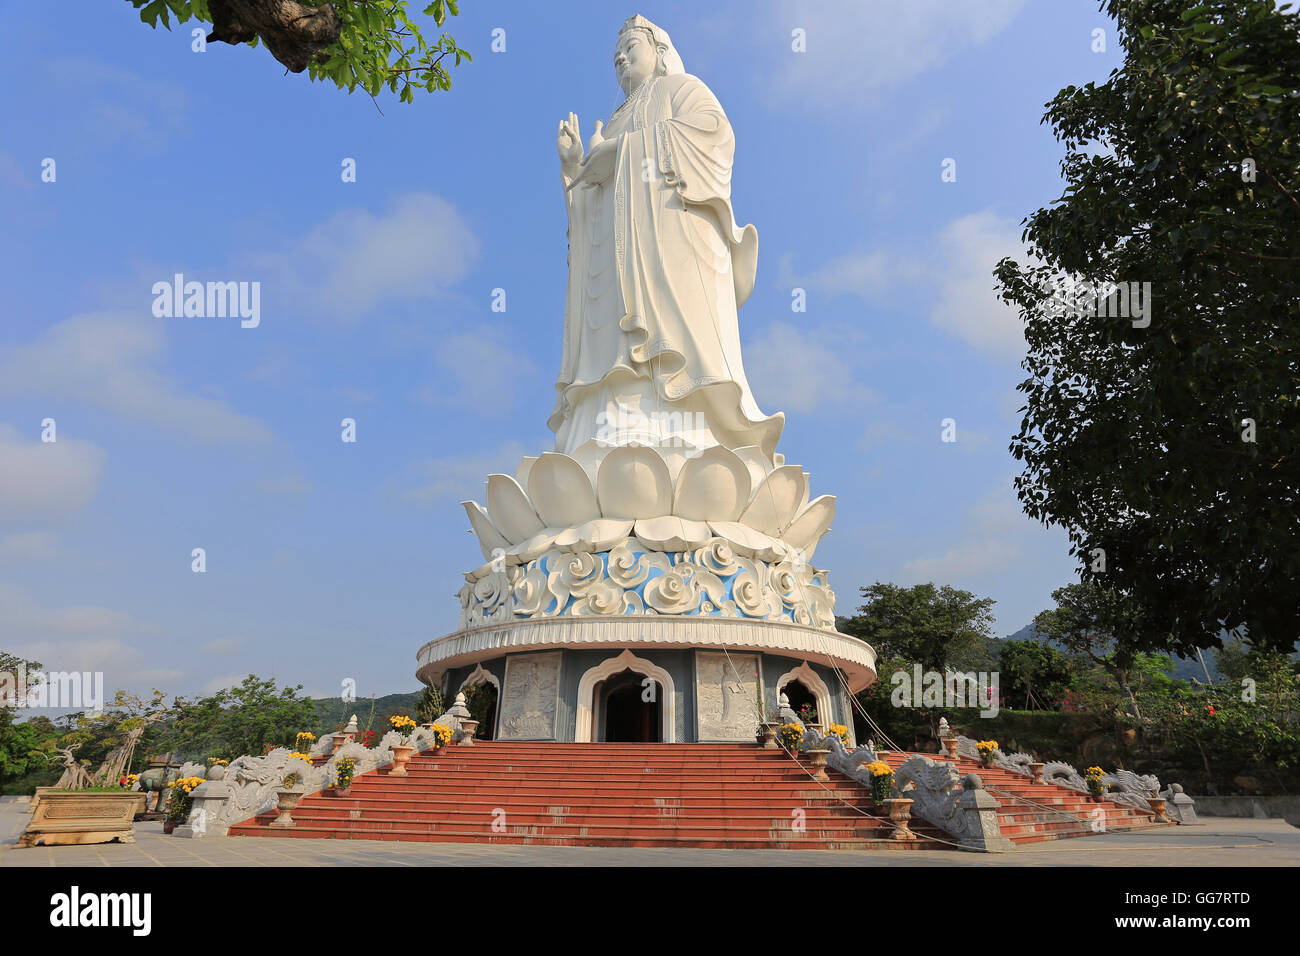 The Statue of buddha in Linh Ung Pagoda, Da Nang, Vietnam Stock Photo